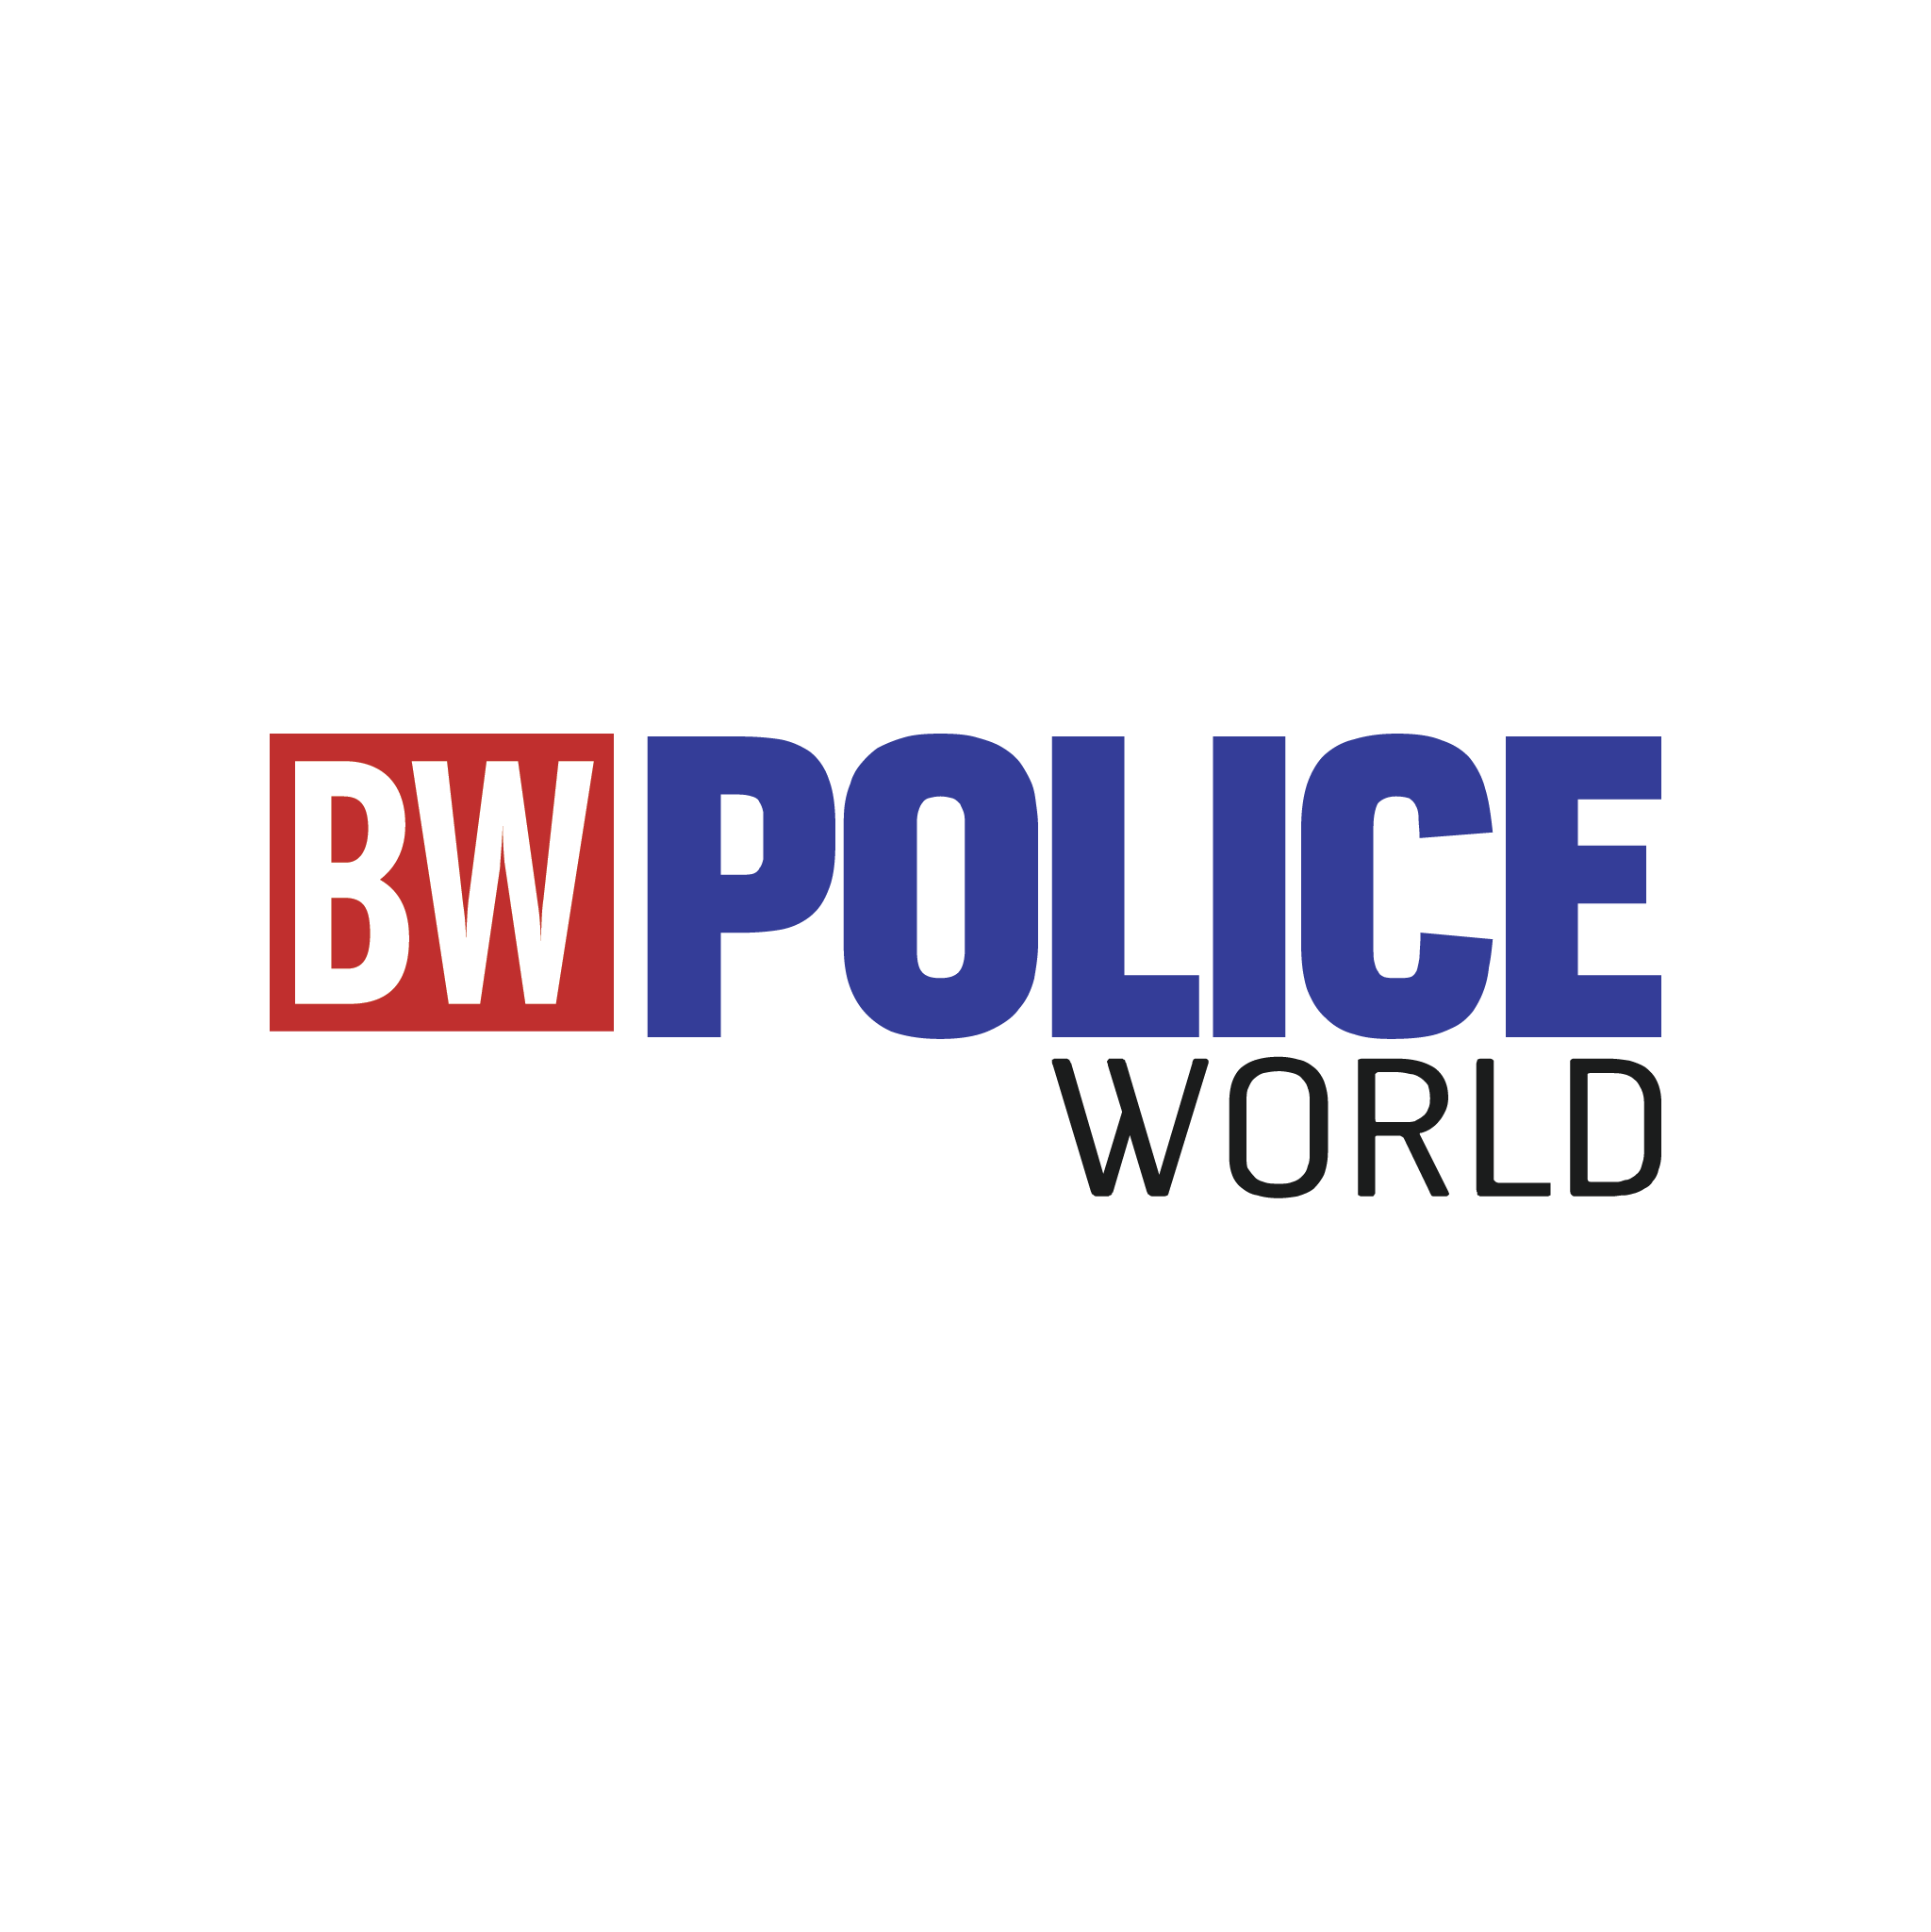 BW Police World